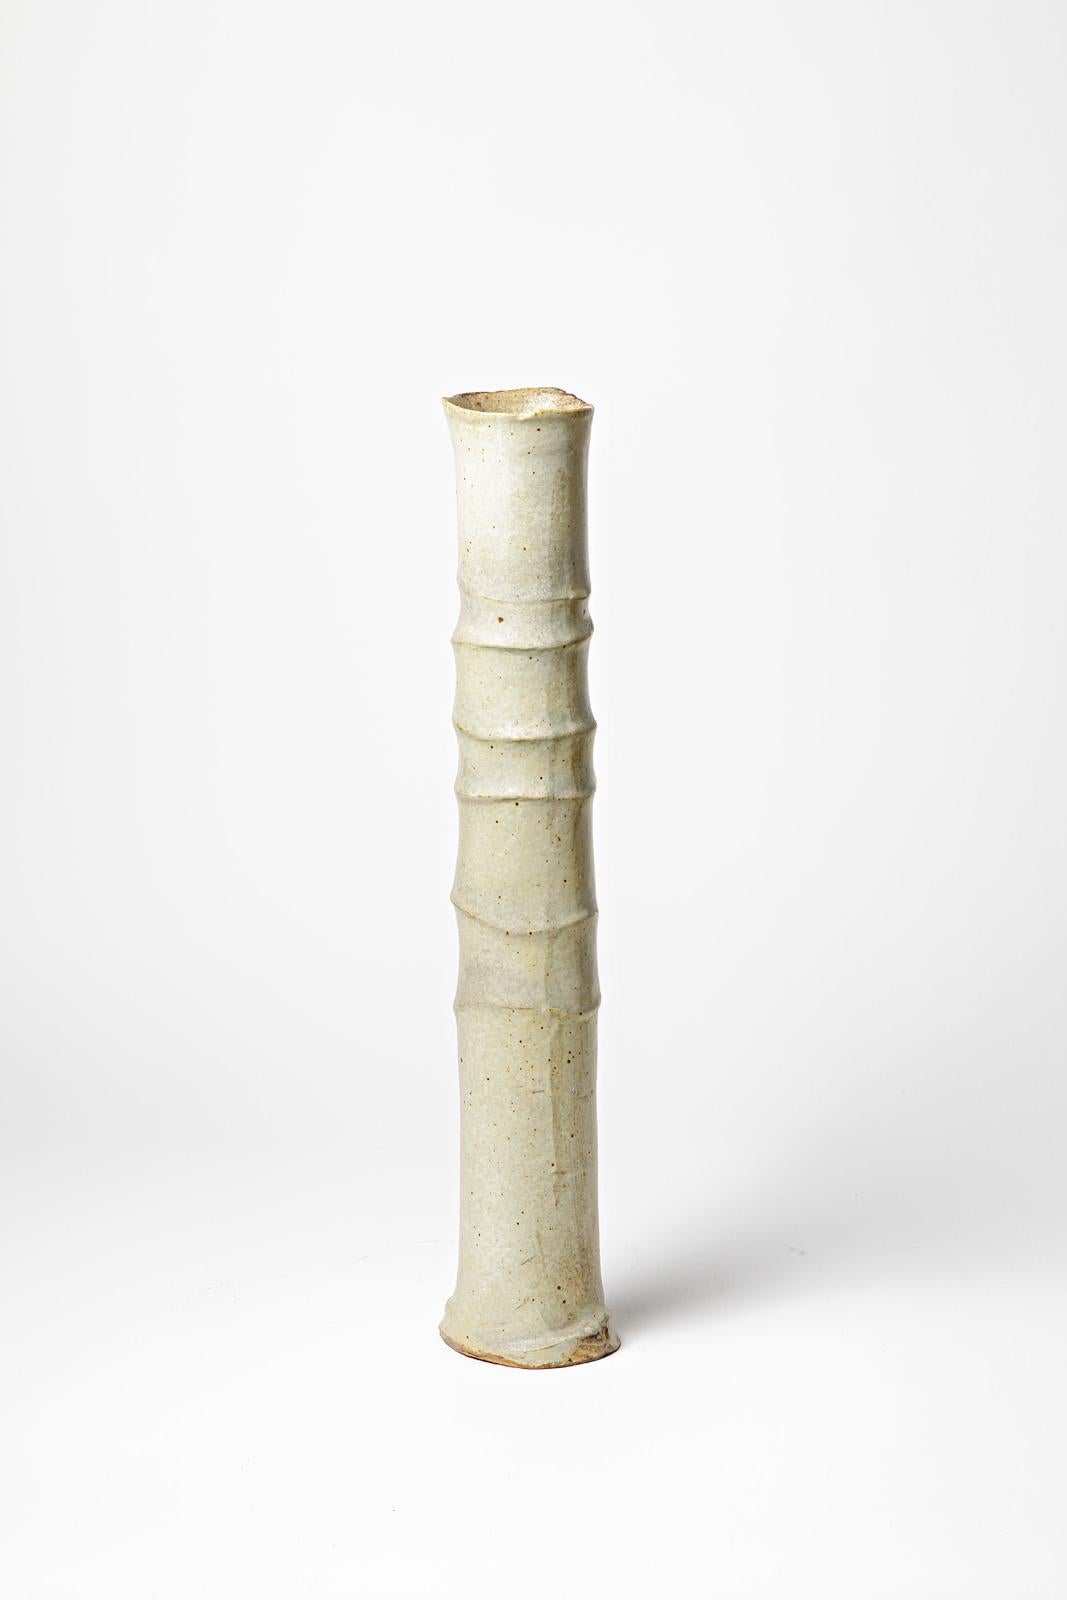 French Large Tubular Vase in White Glazed Stoneware, Jean-Pierre Bonardot, circa 1990